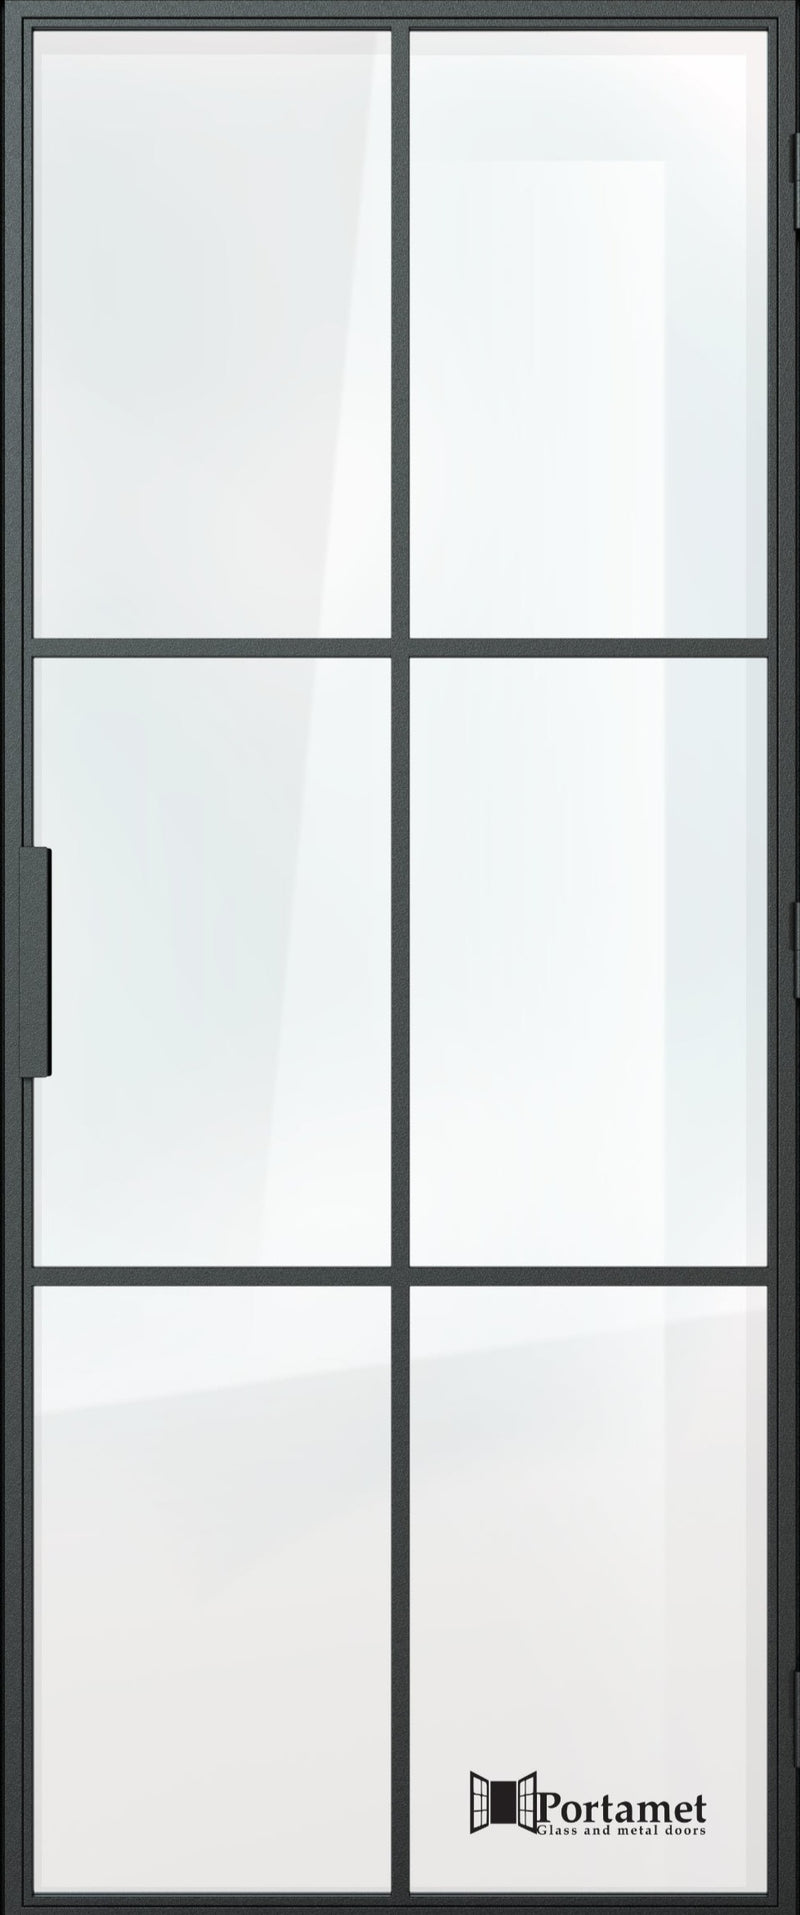 Portamet by Sfarzo - Malmo Classic Single Glazed Steel Hinged Door with Frame